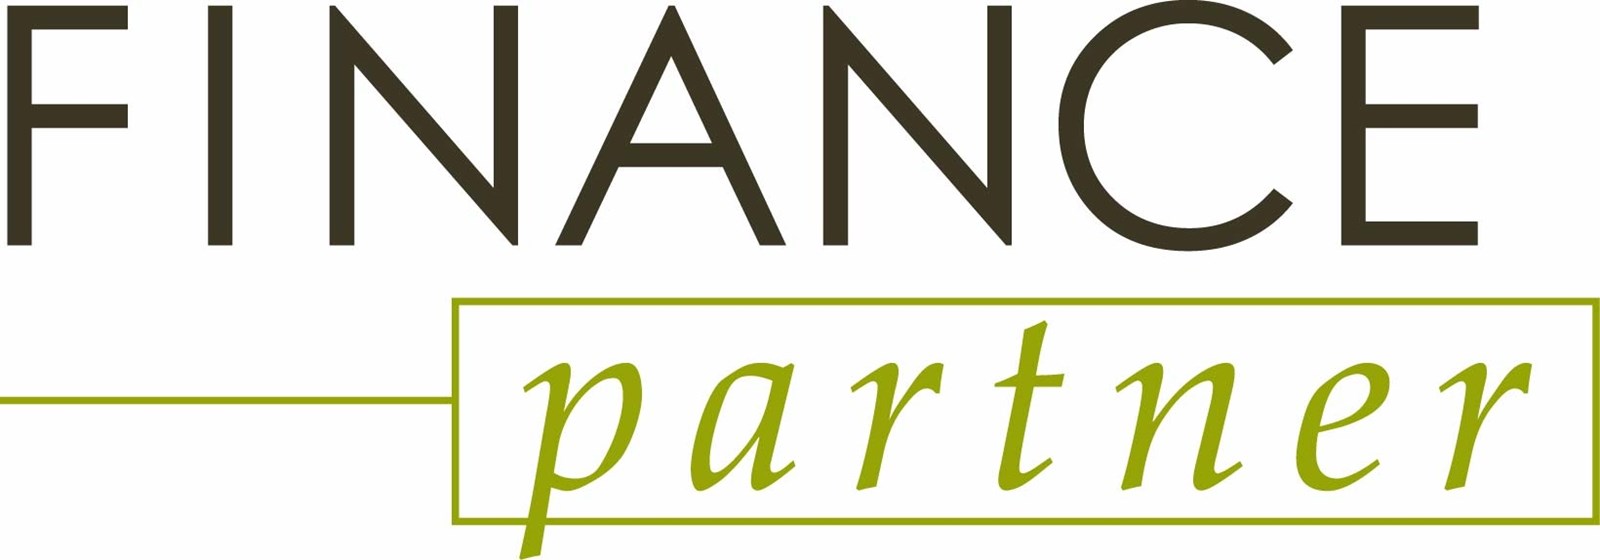 Logo van Finance Partner